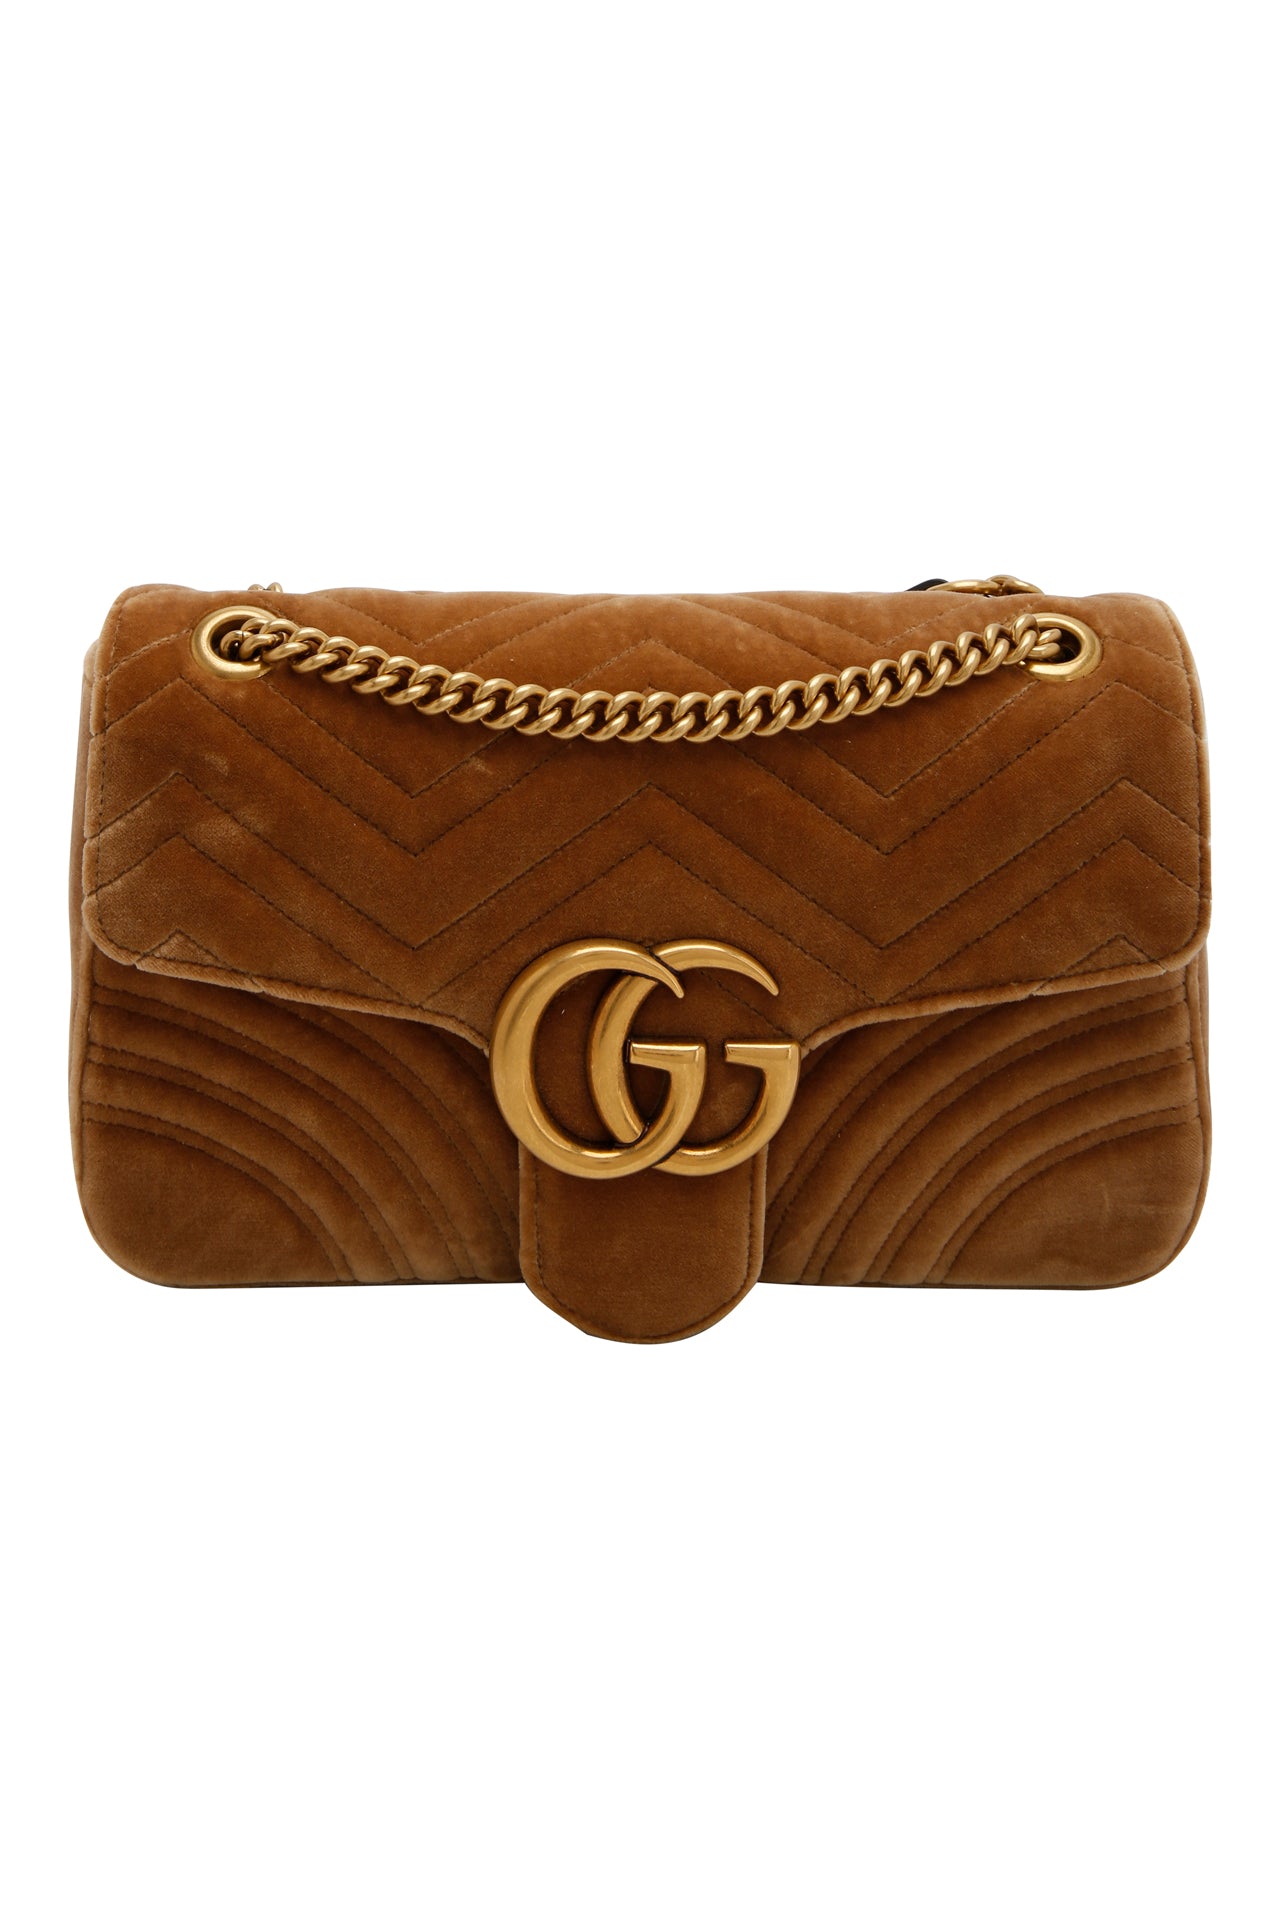 Gucci GG Marmont Velvet Medium Matelassé Shoulder Bag Beige